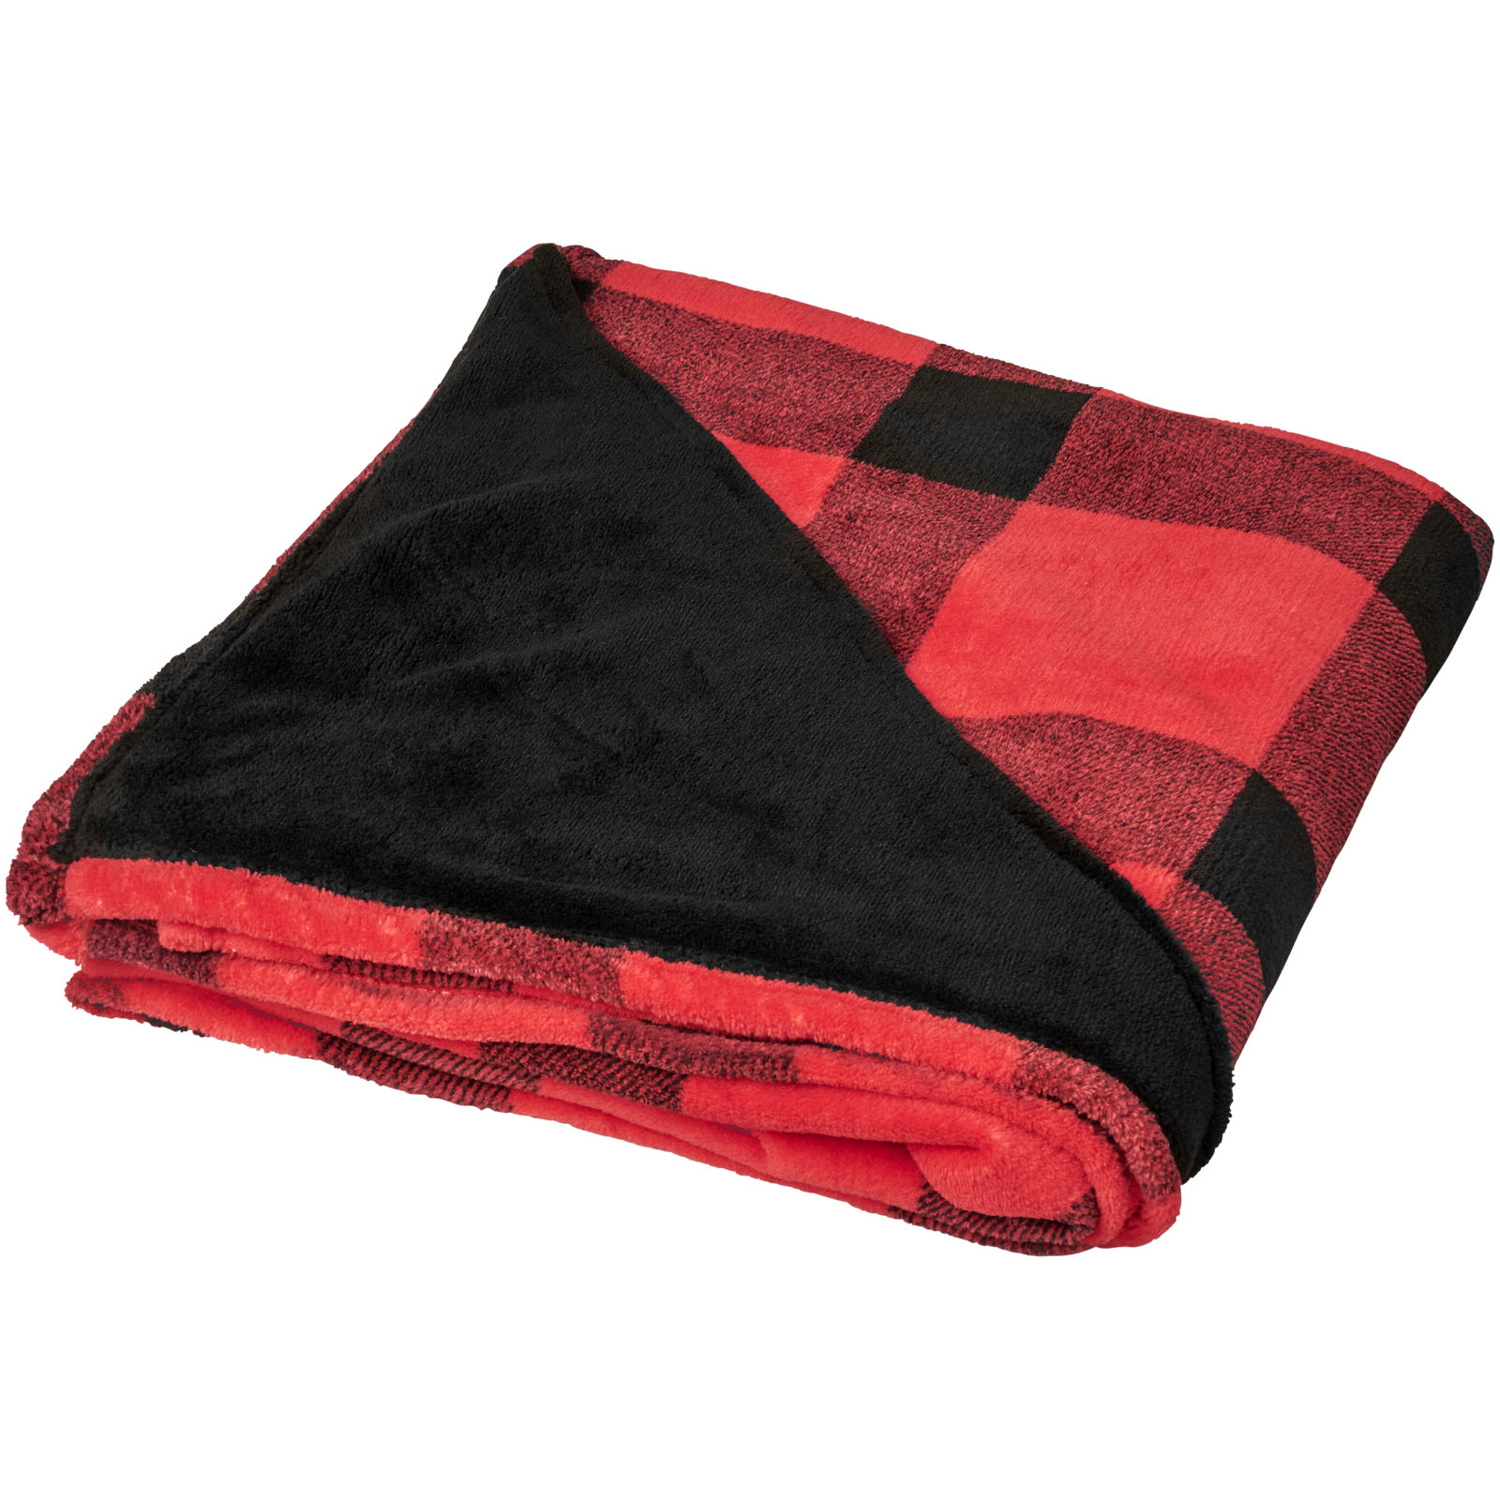 Buffalo ultra plush plaid blanket | Hotline